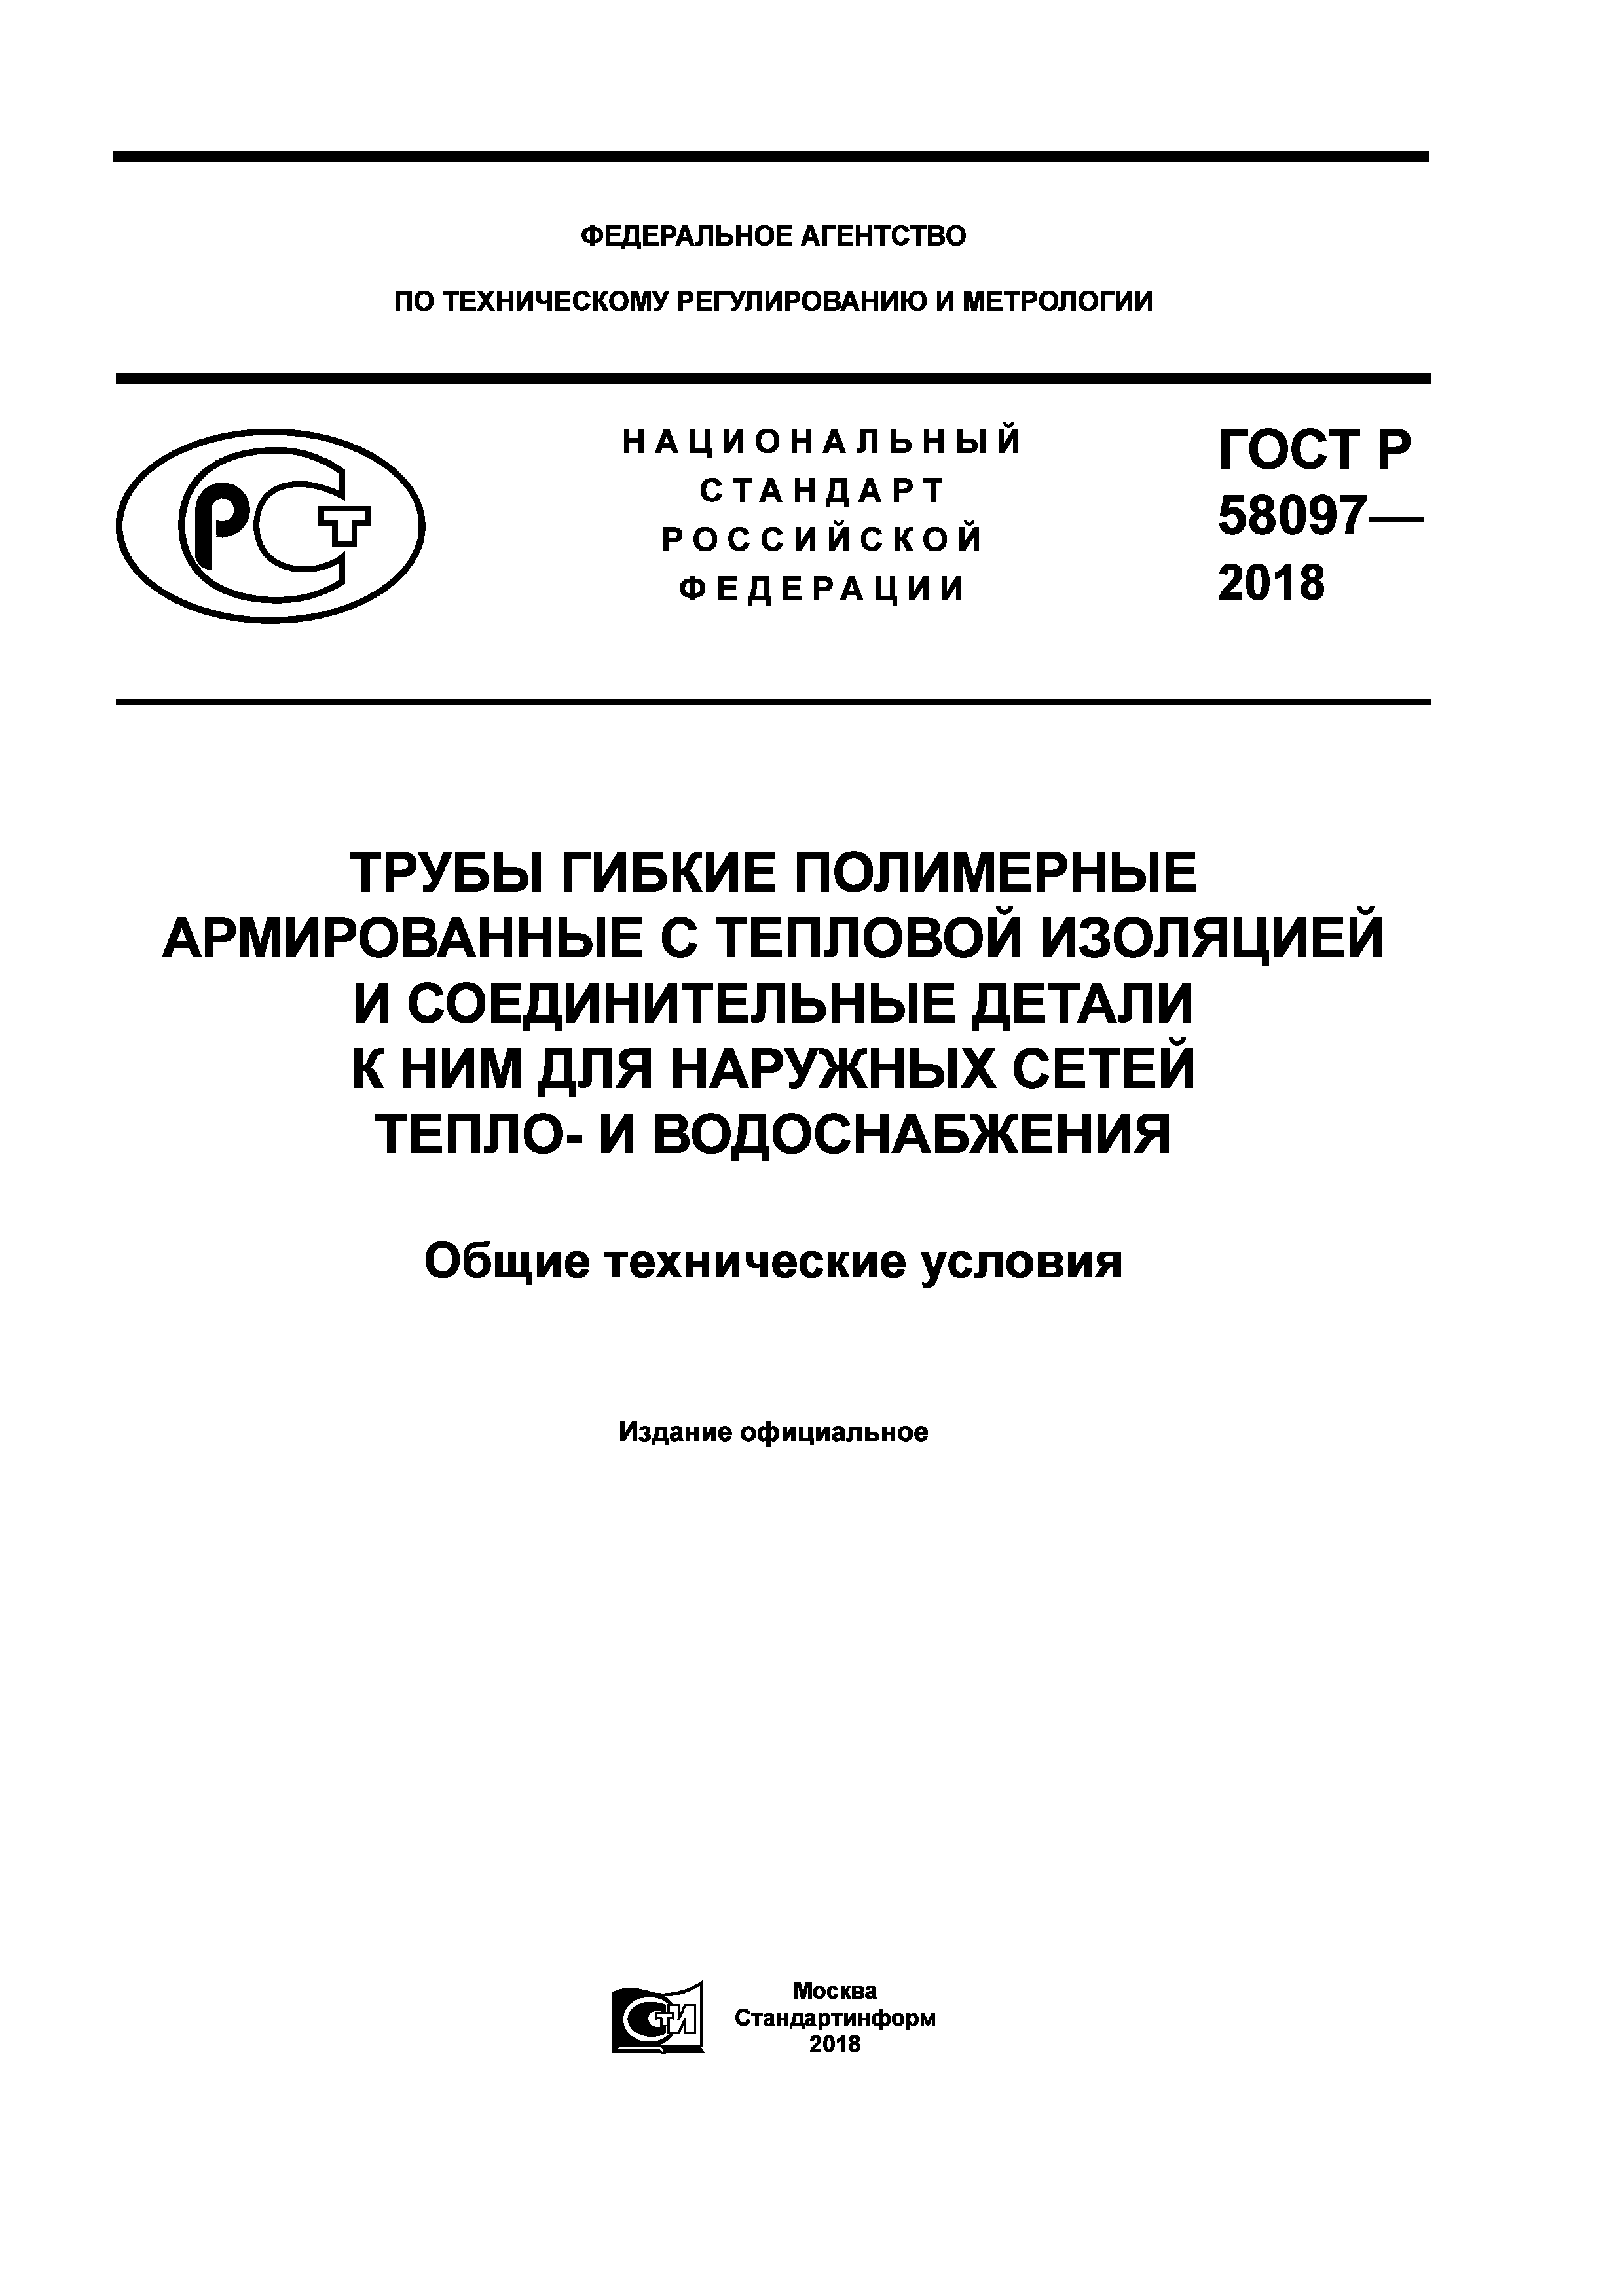 ГОСТ Р 58097-2018